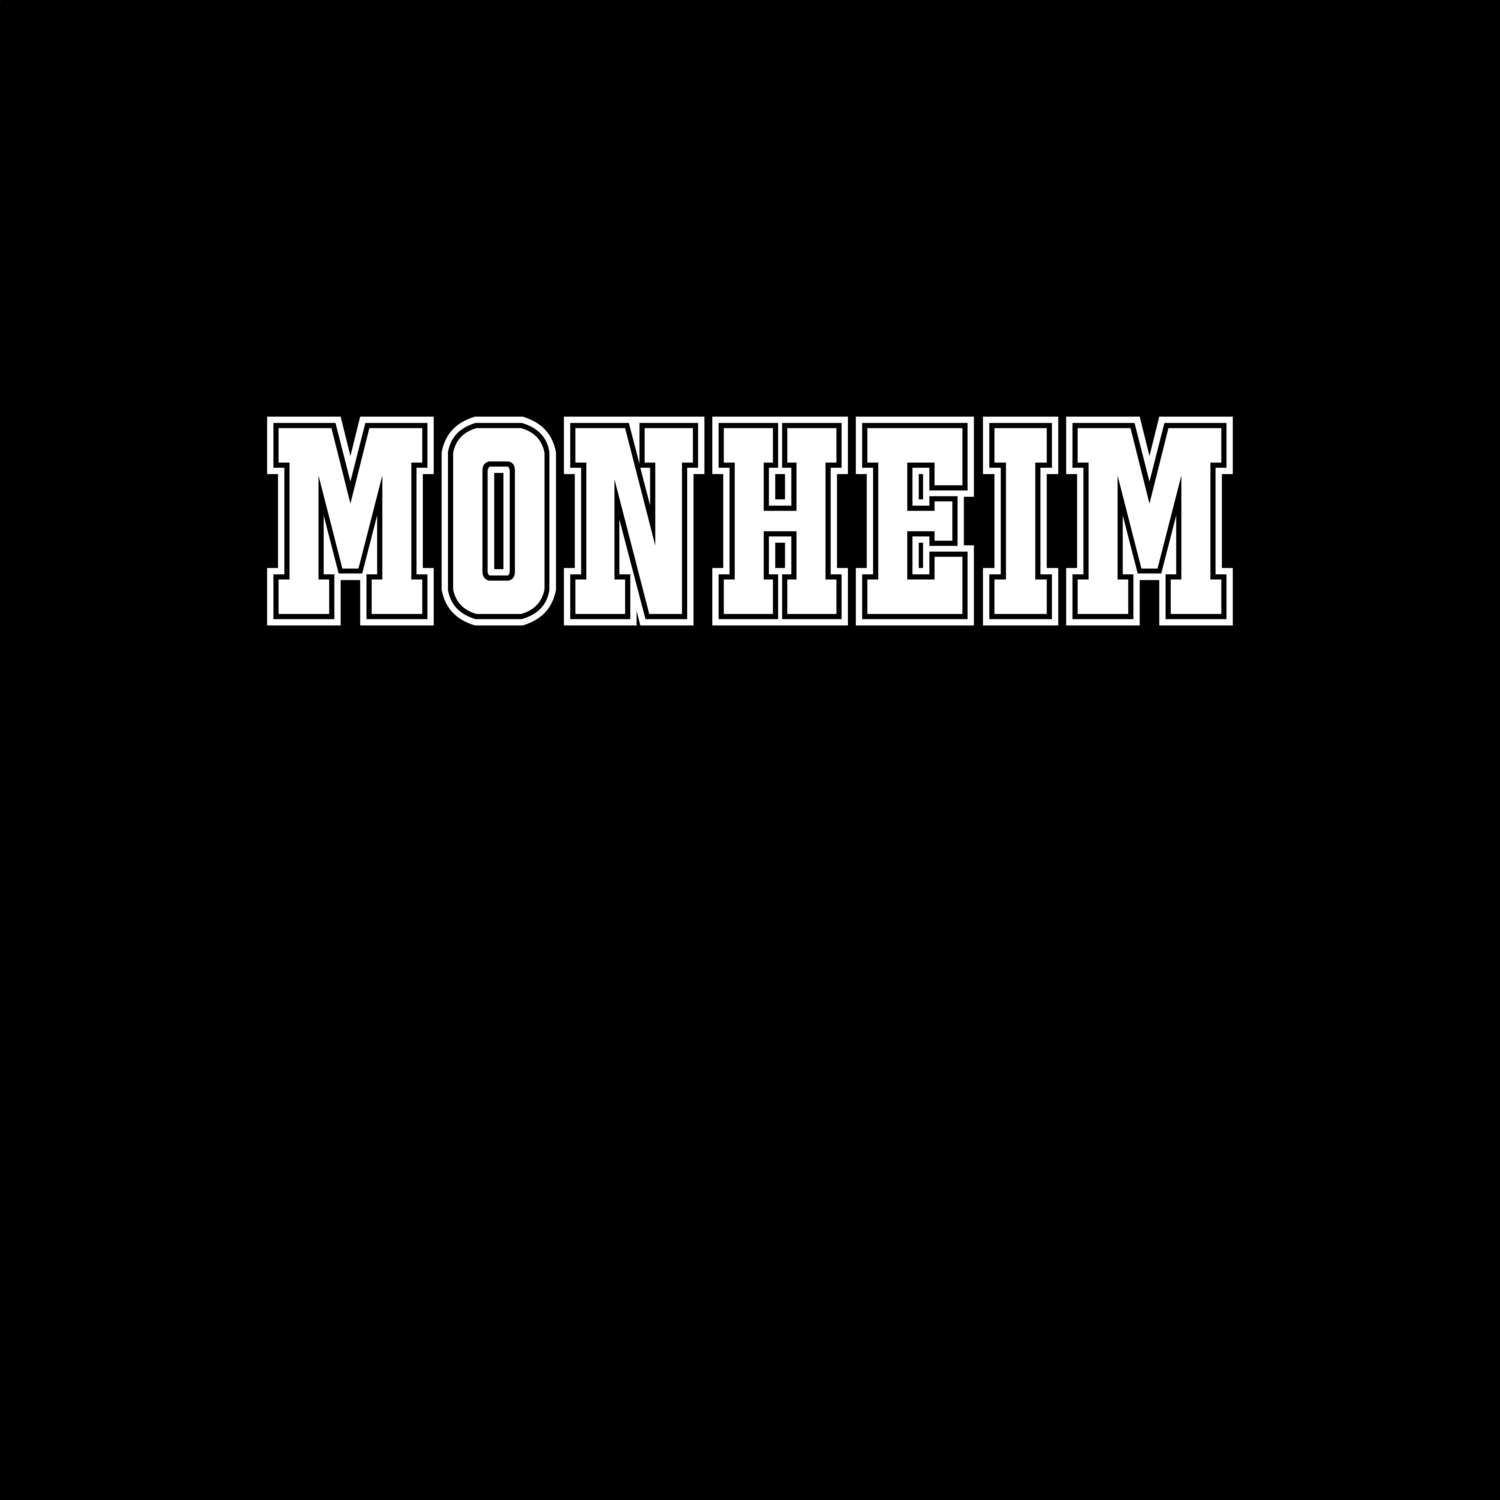 Monheim T-Shirt »Classic«